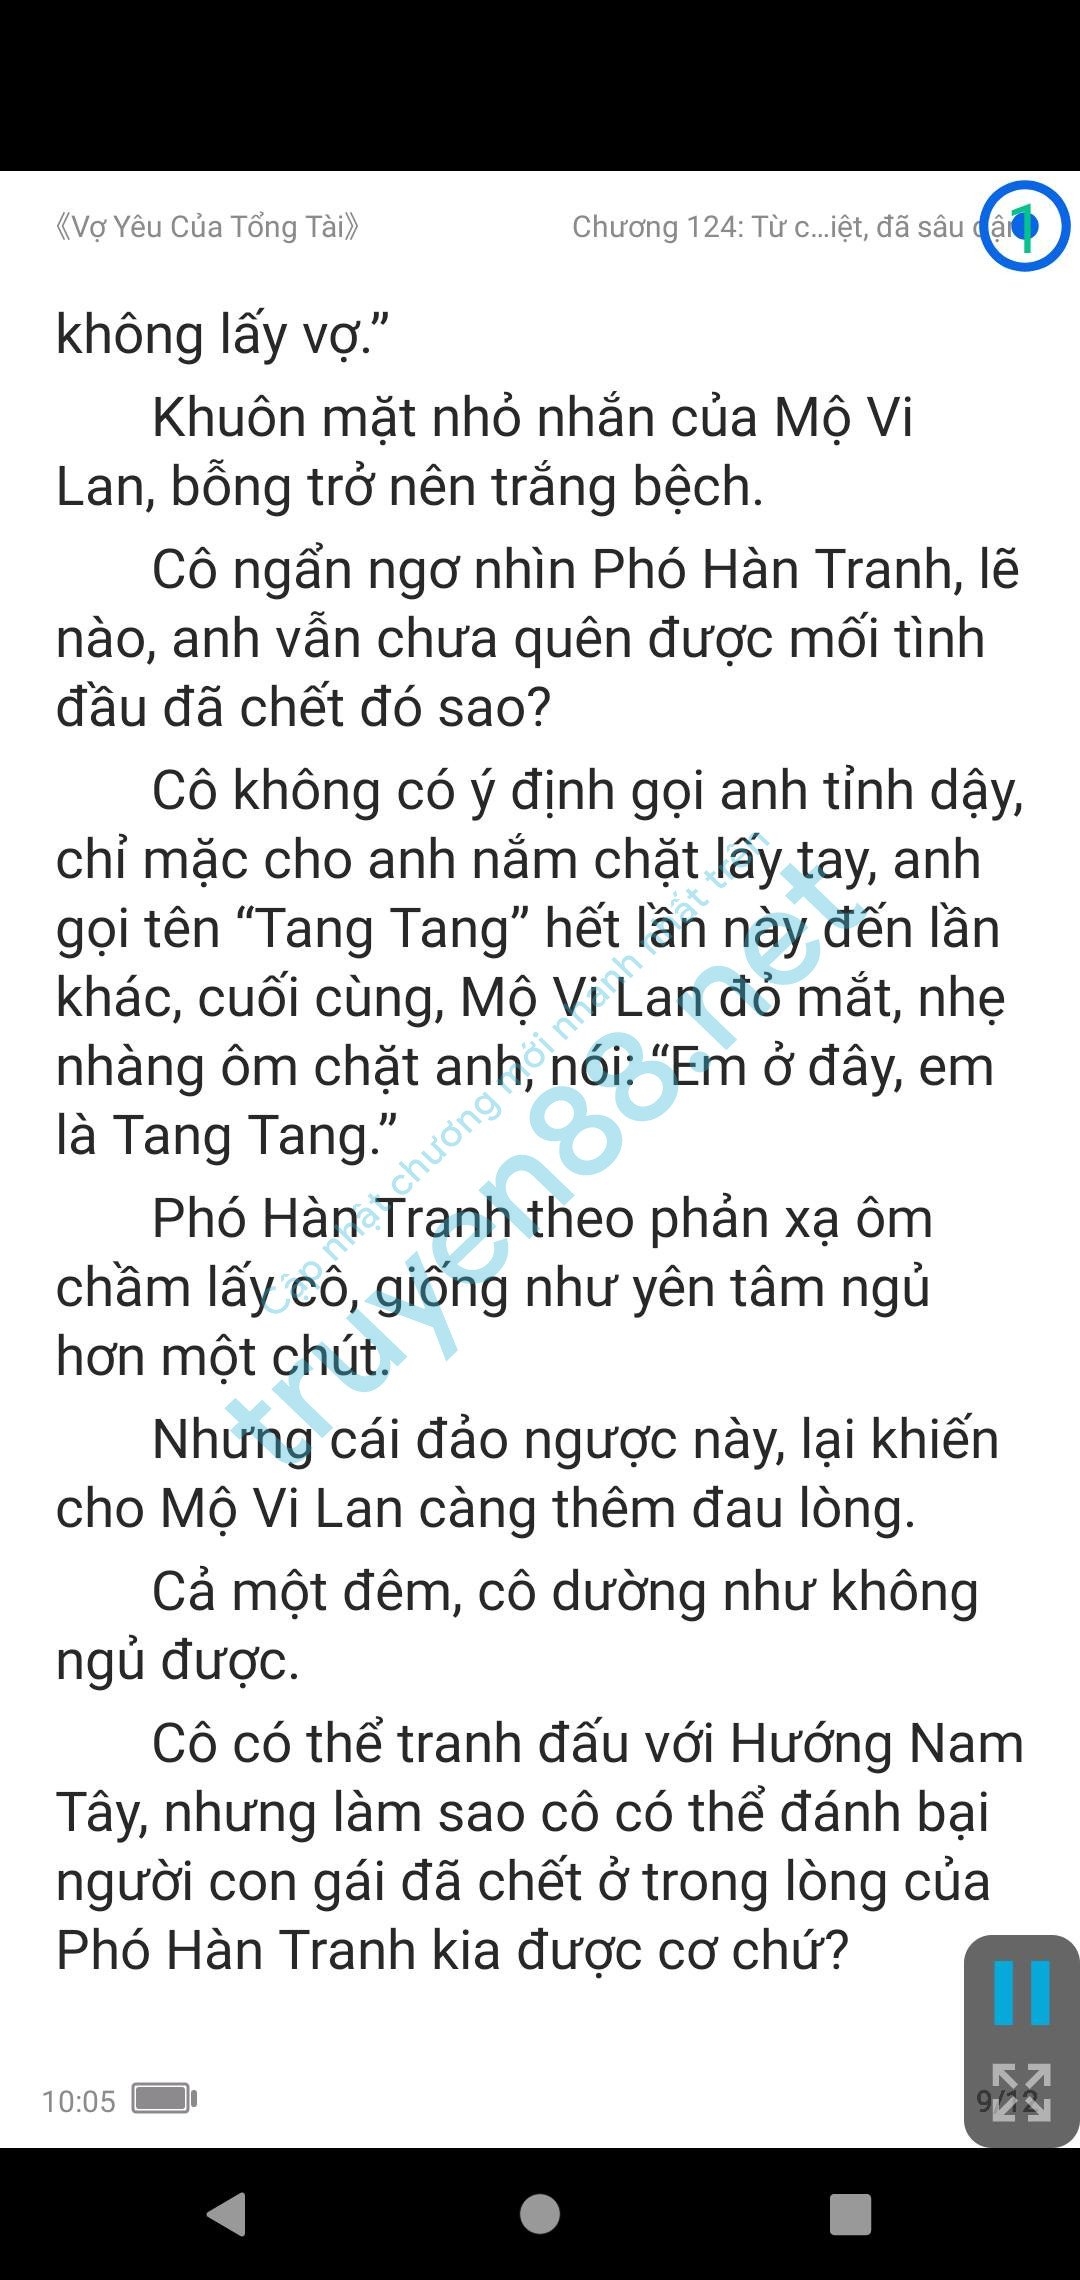 vo-yeu-cua-tong-tai-mo-vi-lan--pho-han-tranh-124-0